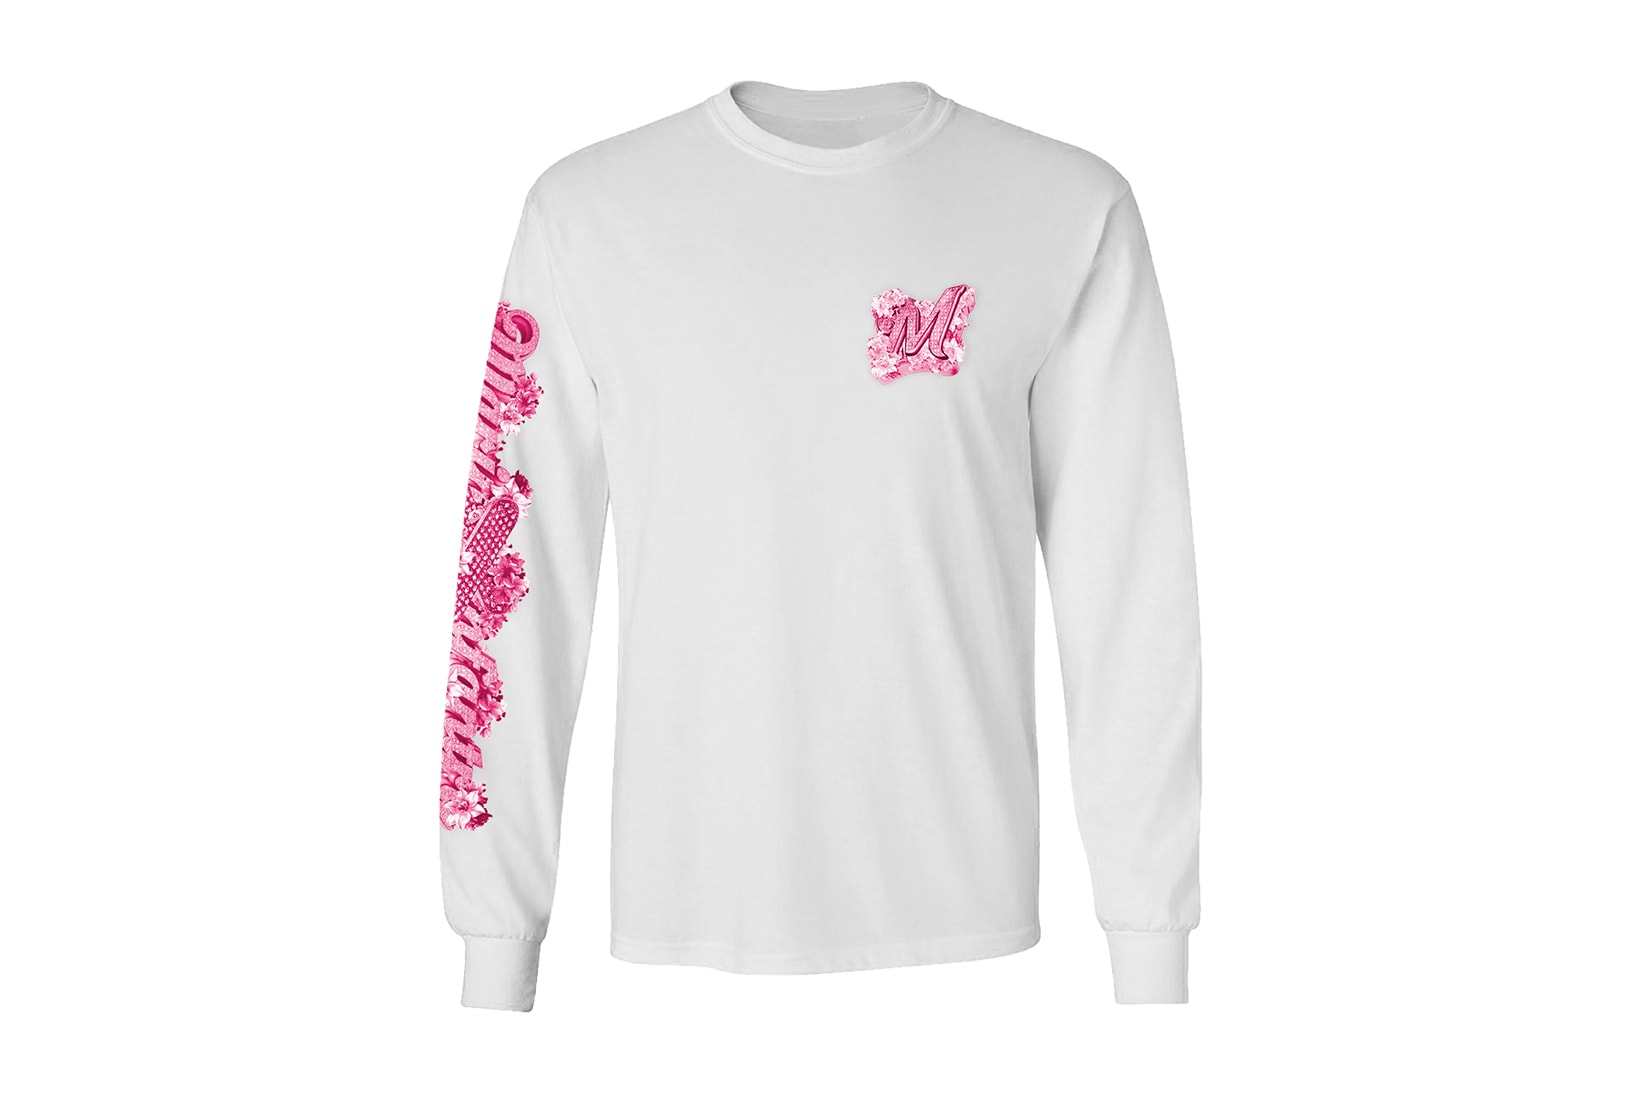 Marino Infantry Skull Logo Floral Logo t-shirt sweatpants fashion february 2018 ASAP Ant clothing clothes